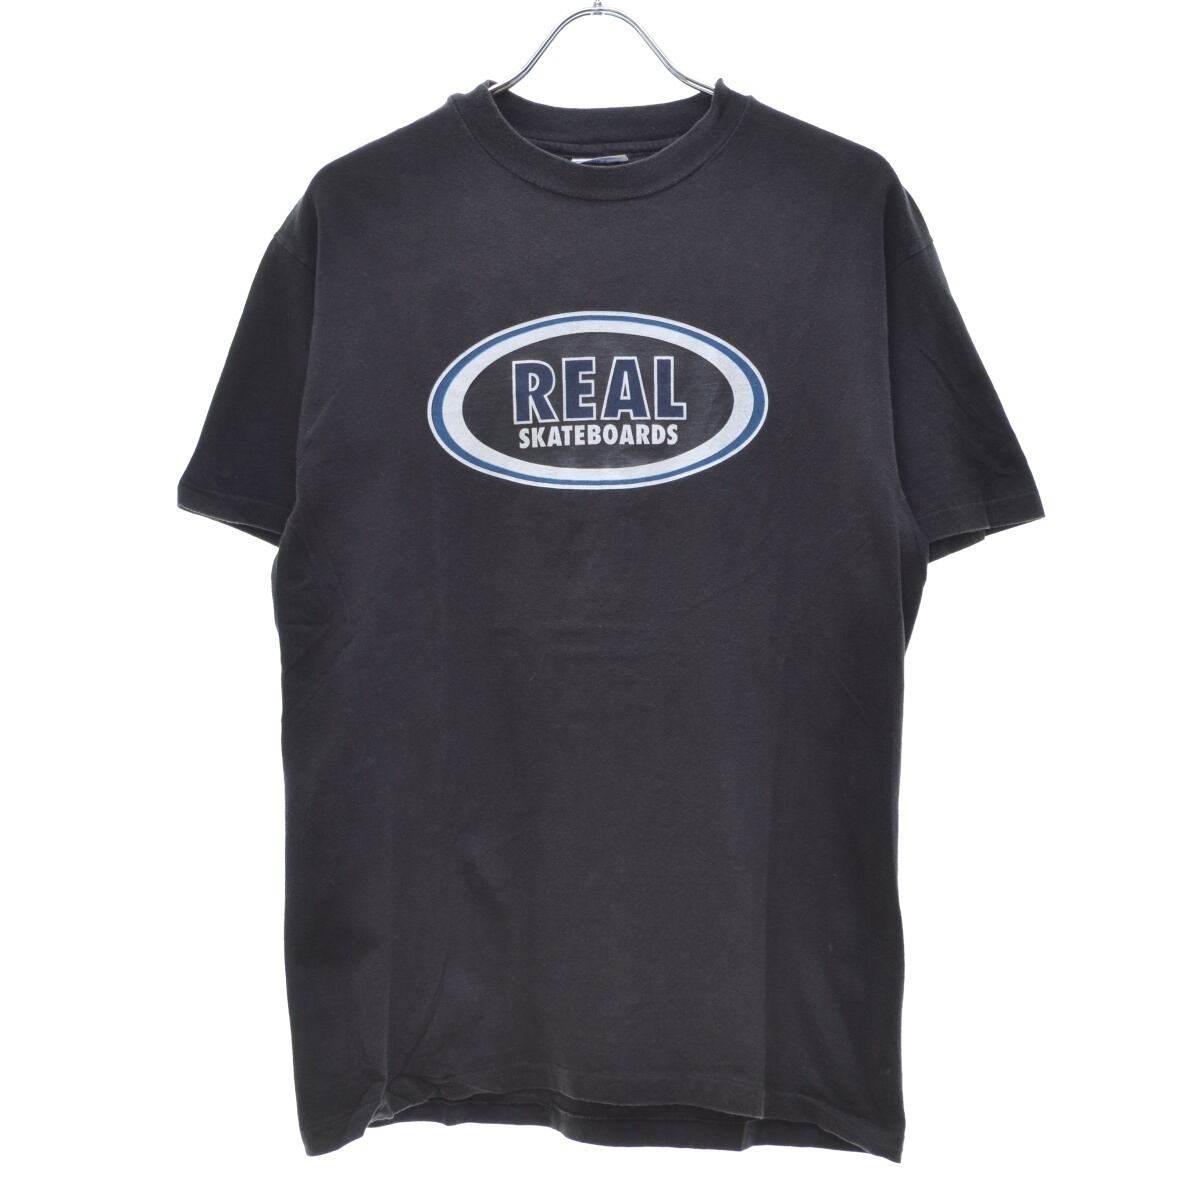 REAL SKATEBOARDS 90s ロゴプリント 半袖Tシャツ old skate | カンフル 